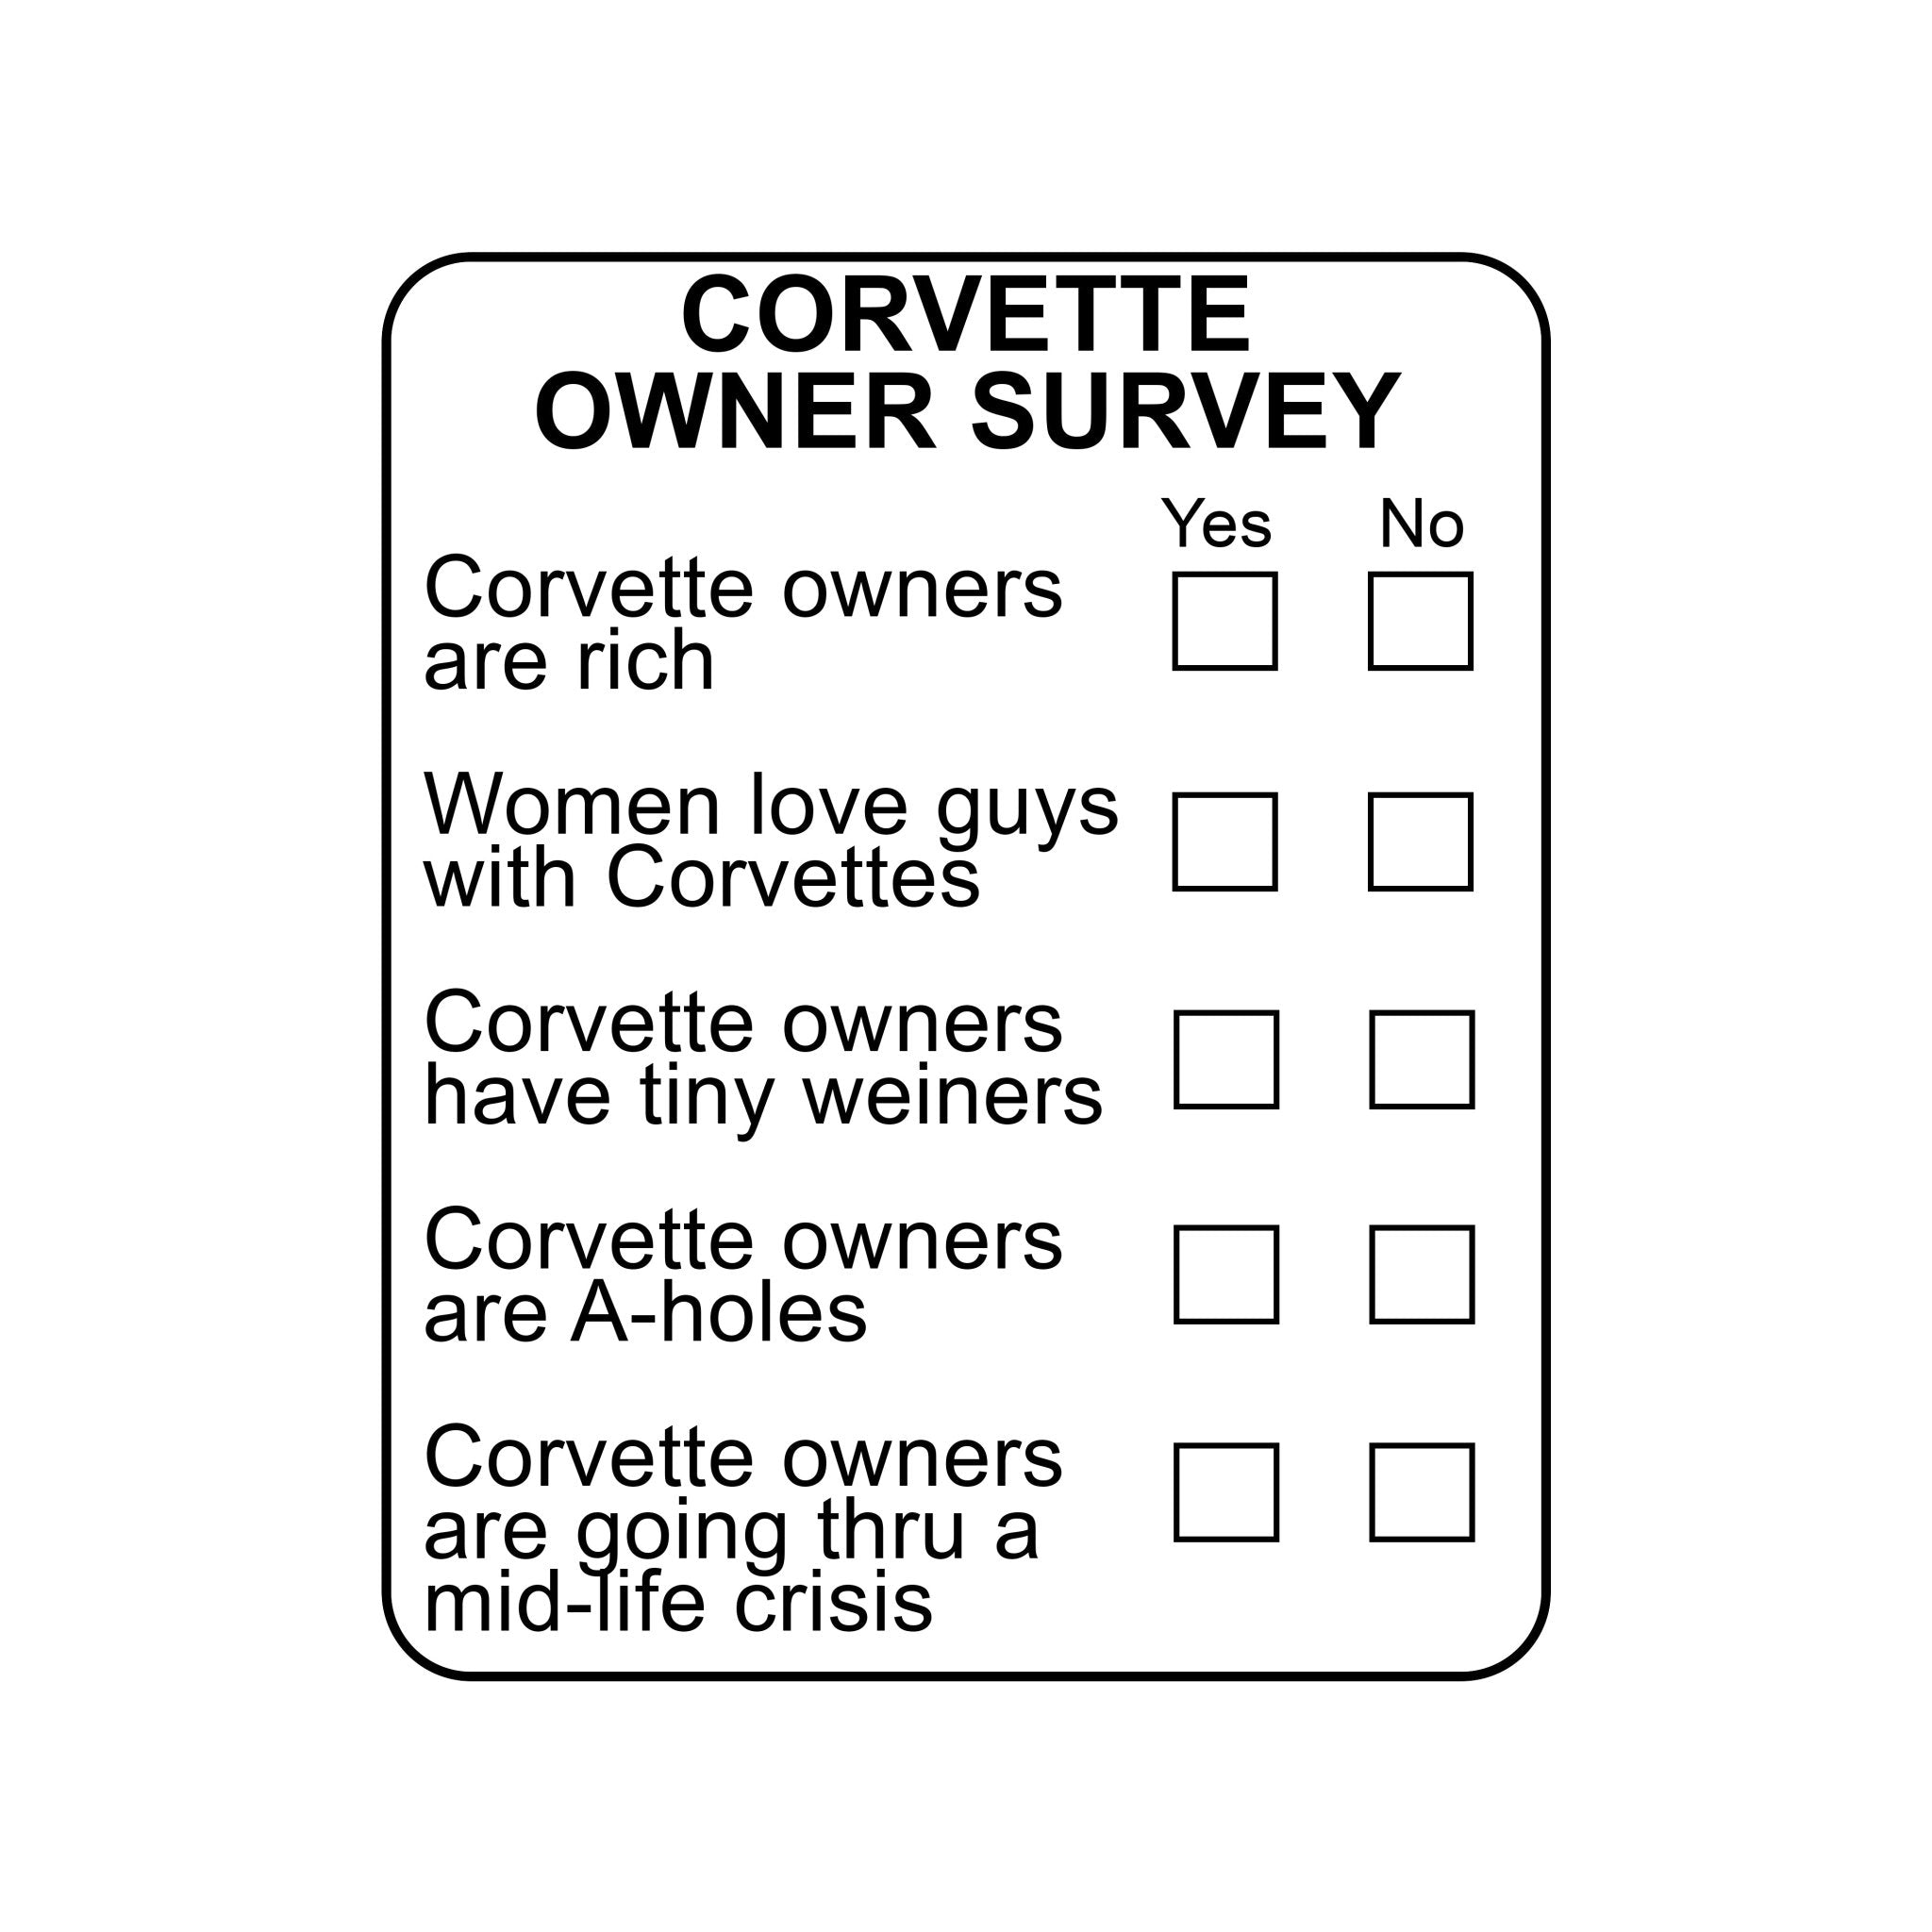 "Corvette Owner Survey" White Ceramic Coffee Mug,11 oz. - Vette1 - Misc. Coffee Mugs